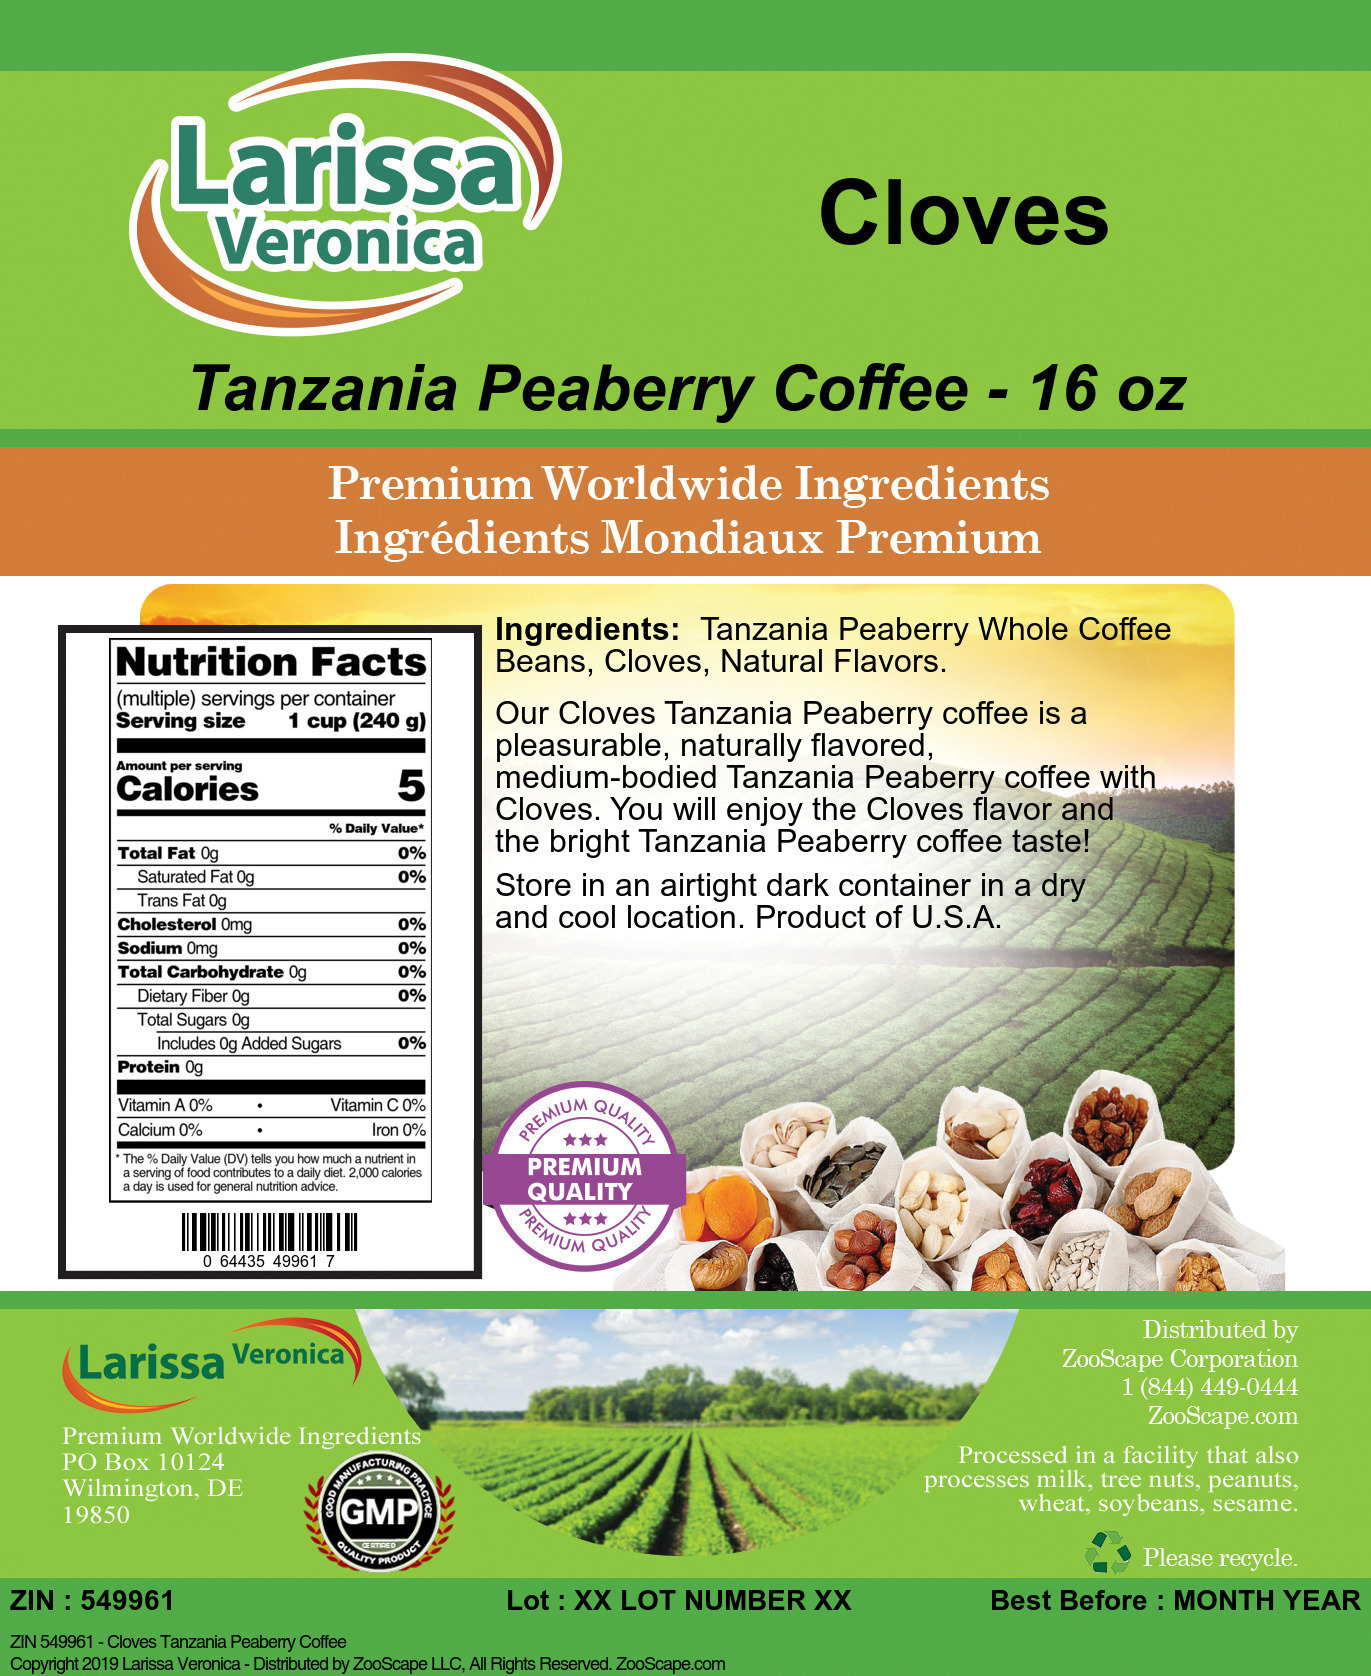 Cloves Tanzania Peaberry Coffee - Label